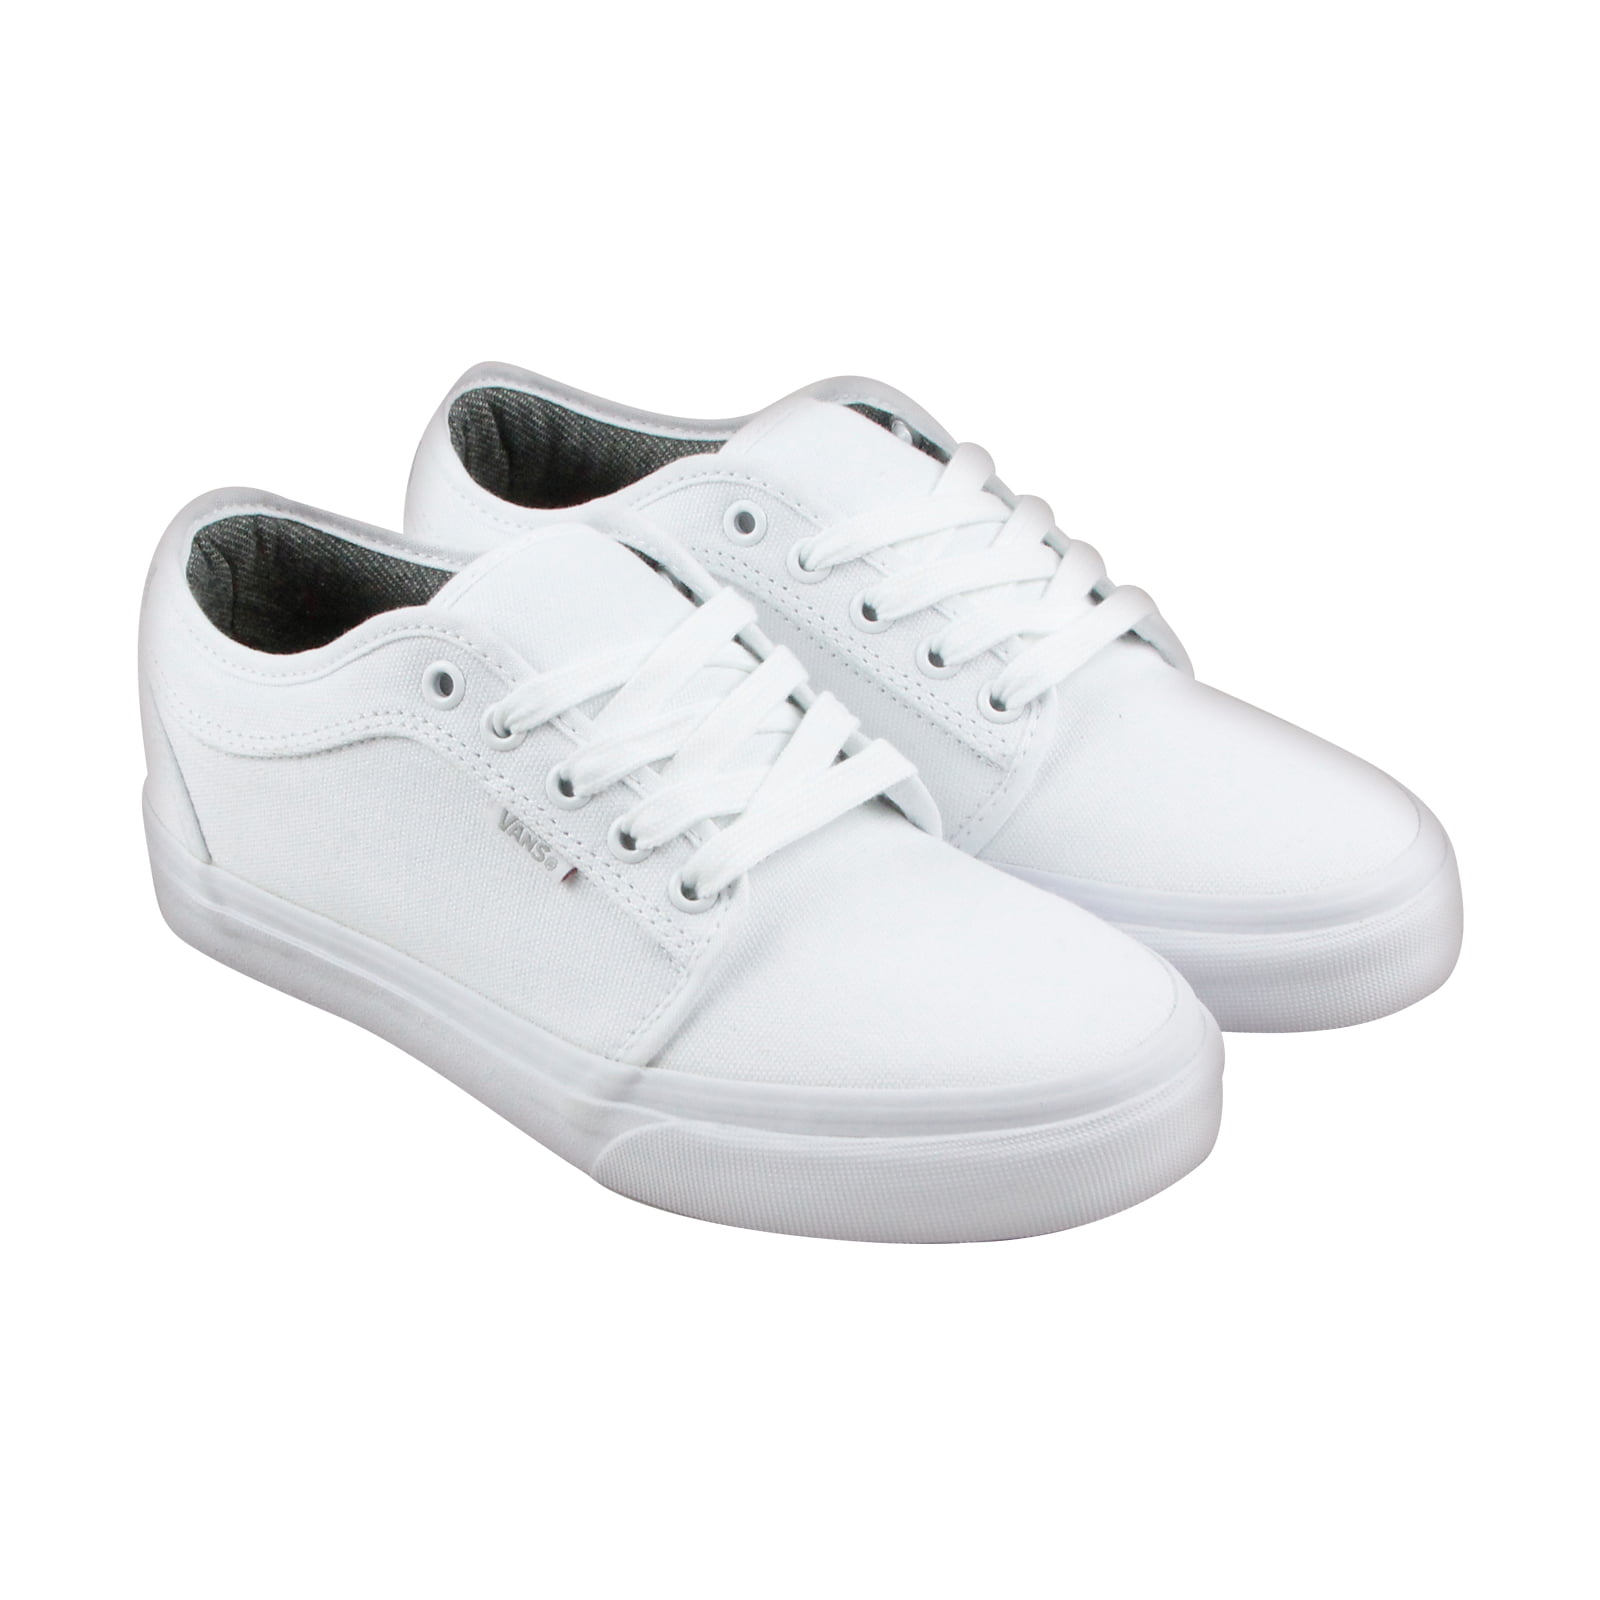 Vans Vans Chukka Low Mens White Canvas Lace Up Sneakers Shoes